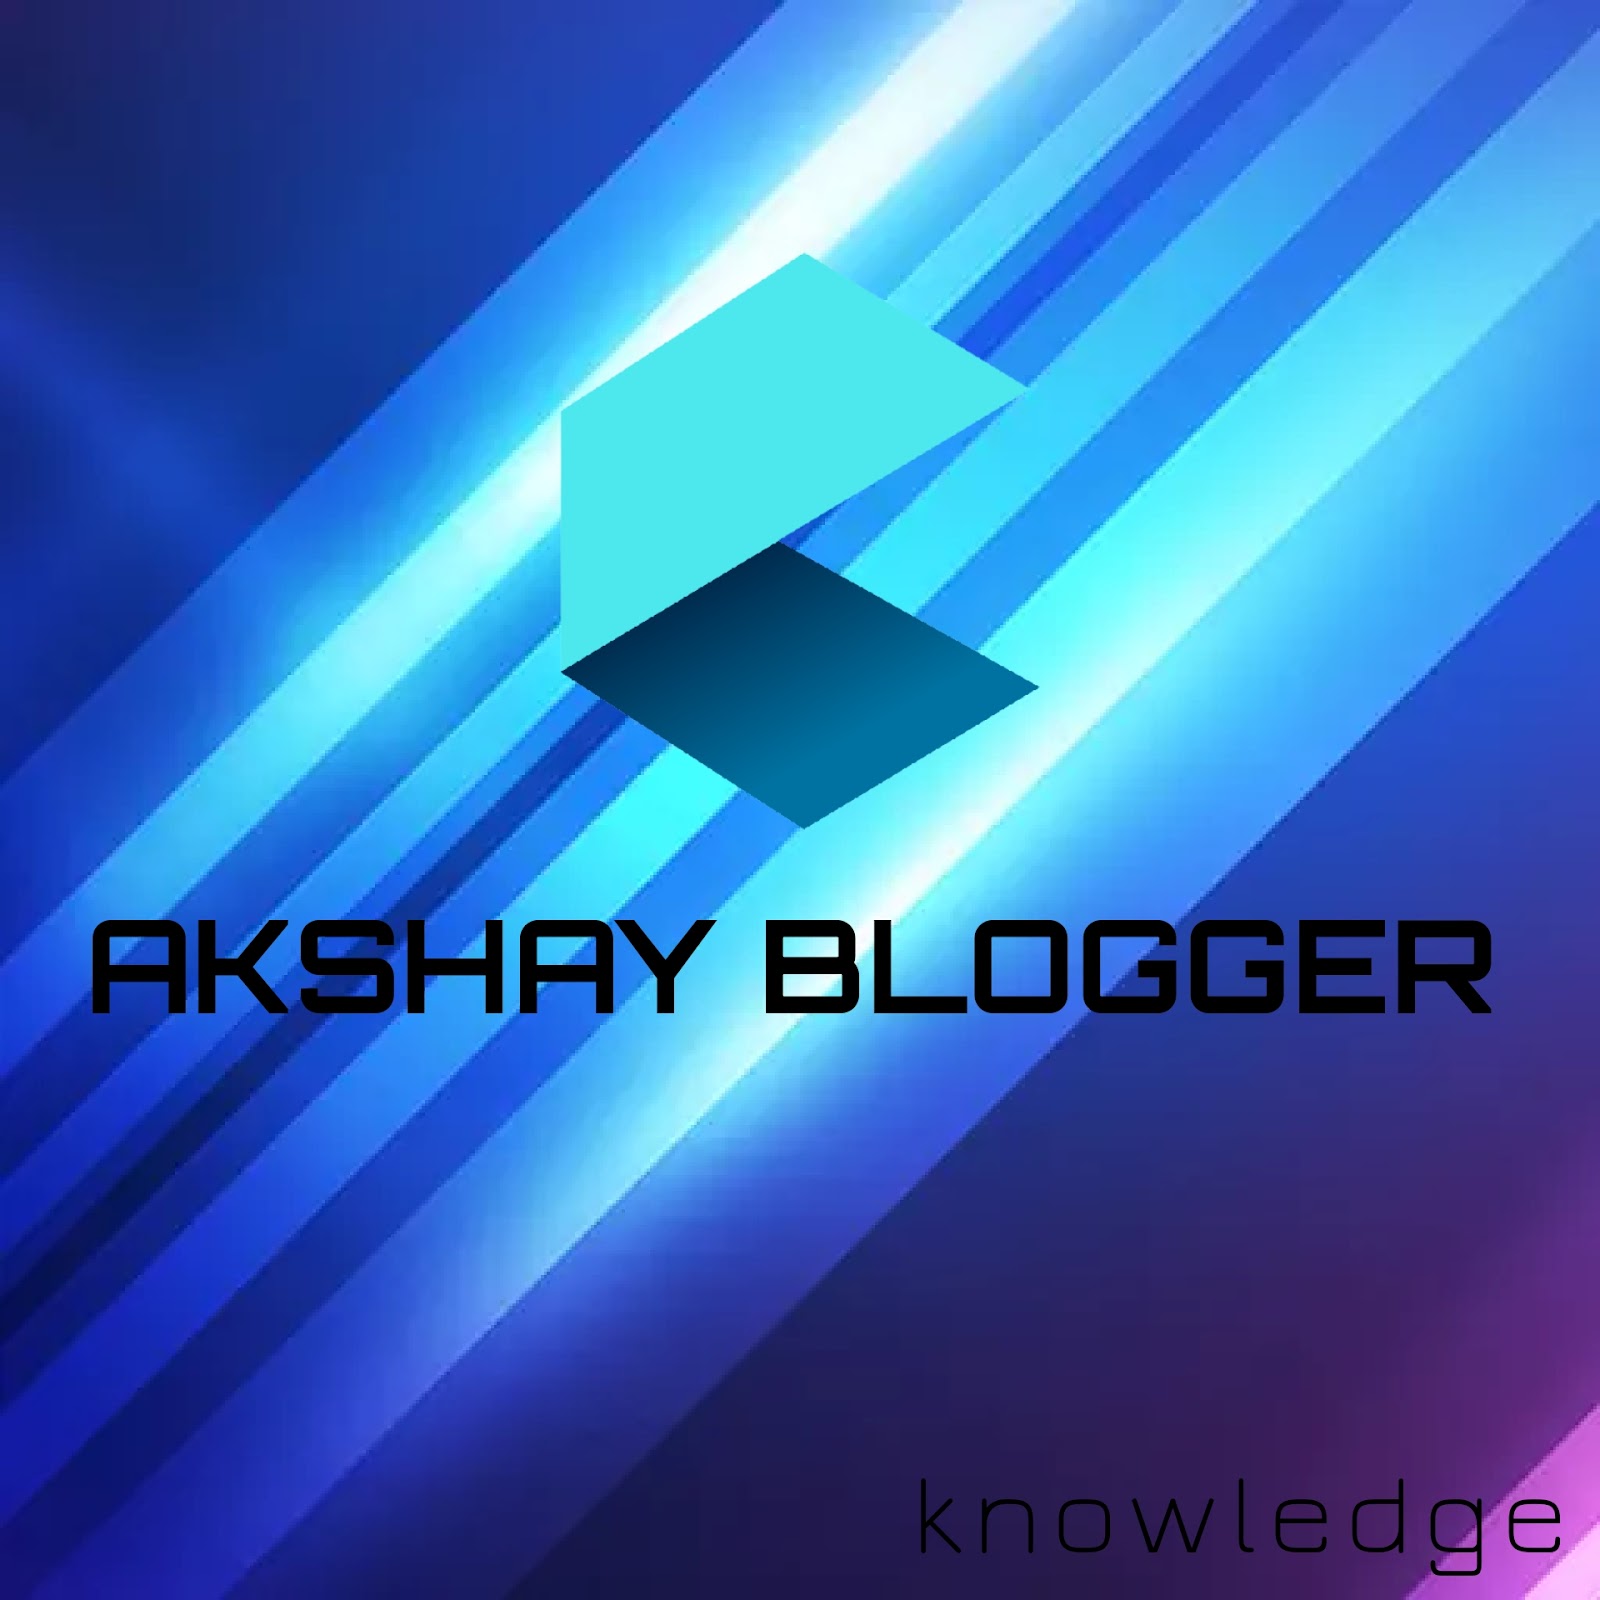 Akshay blogger